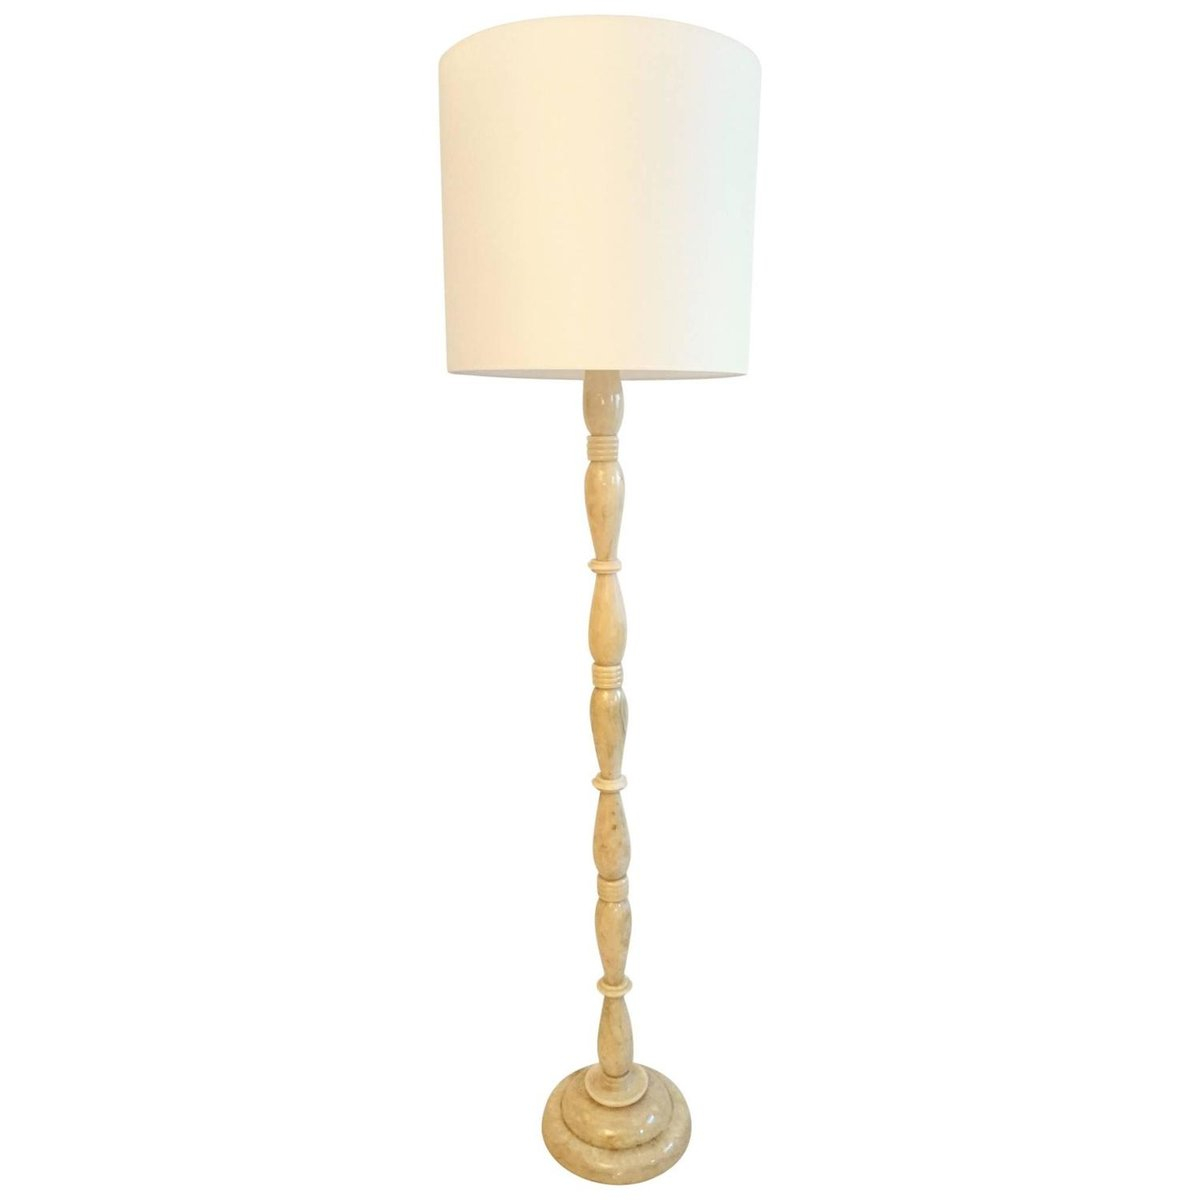 Italian Art Deco Onyx Floor Lamp intended for sizing 1200 X 1200